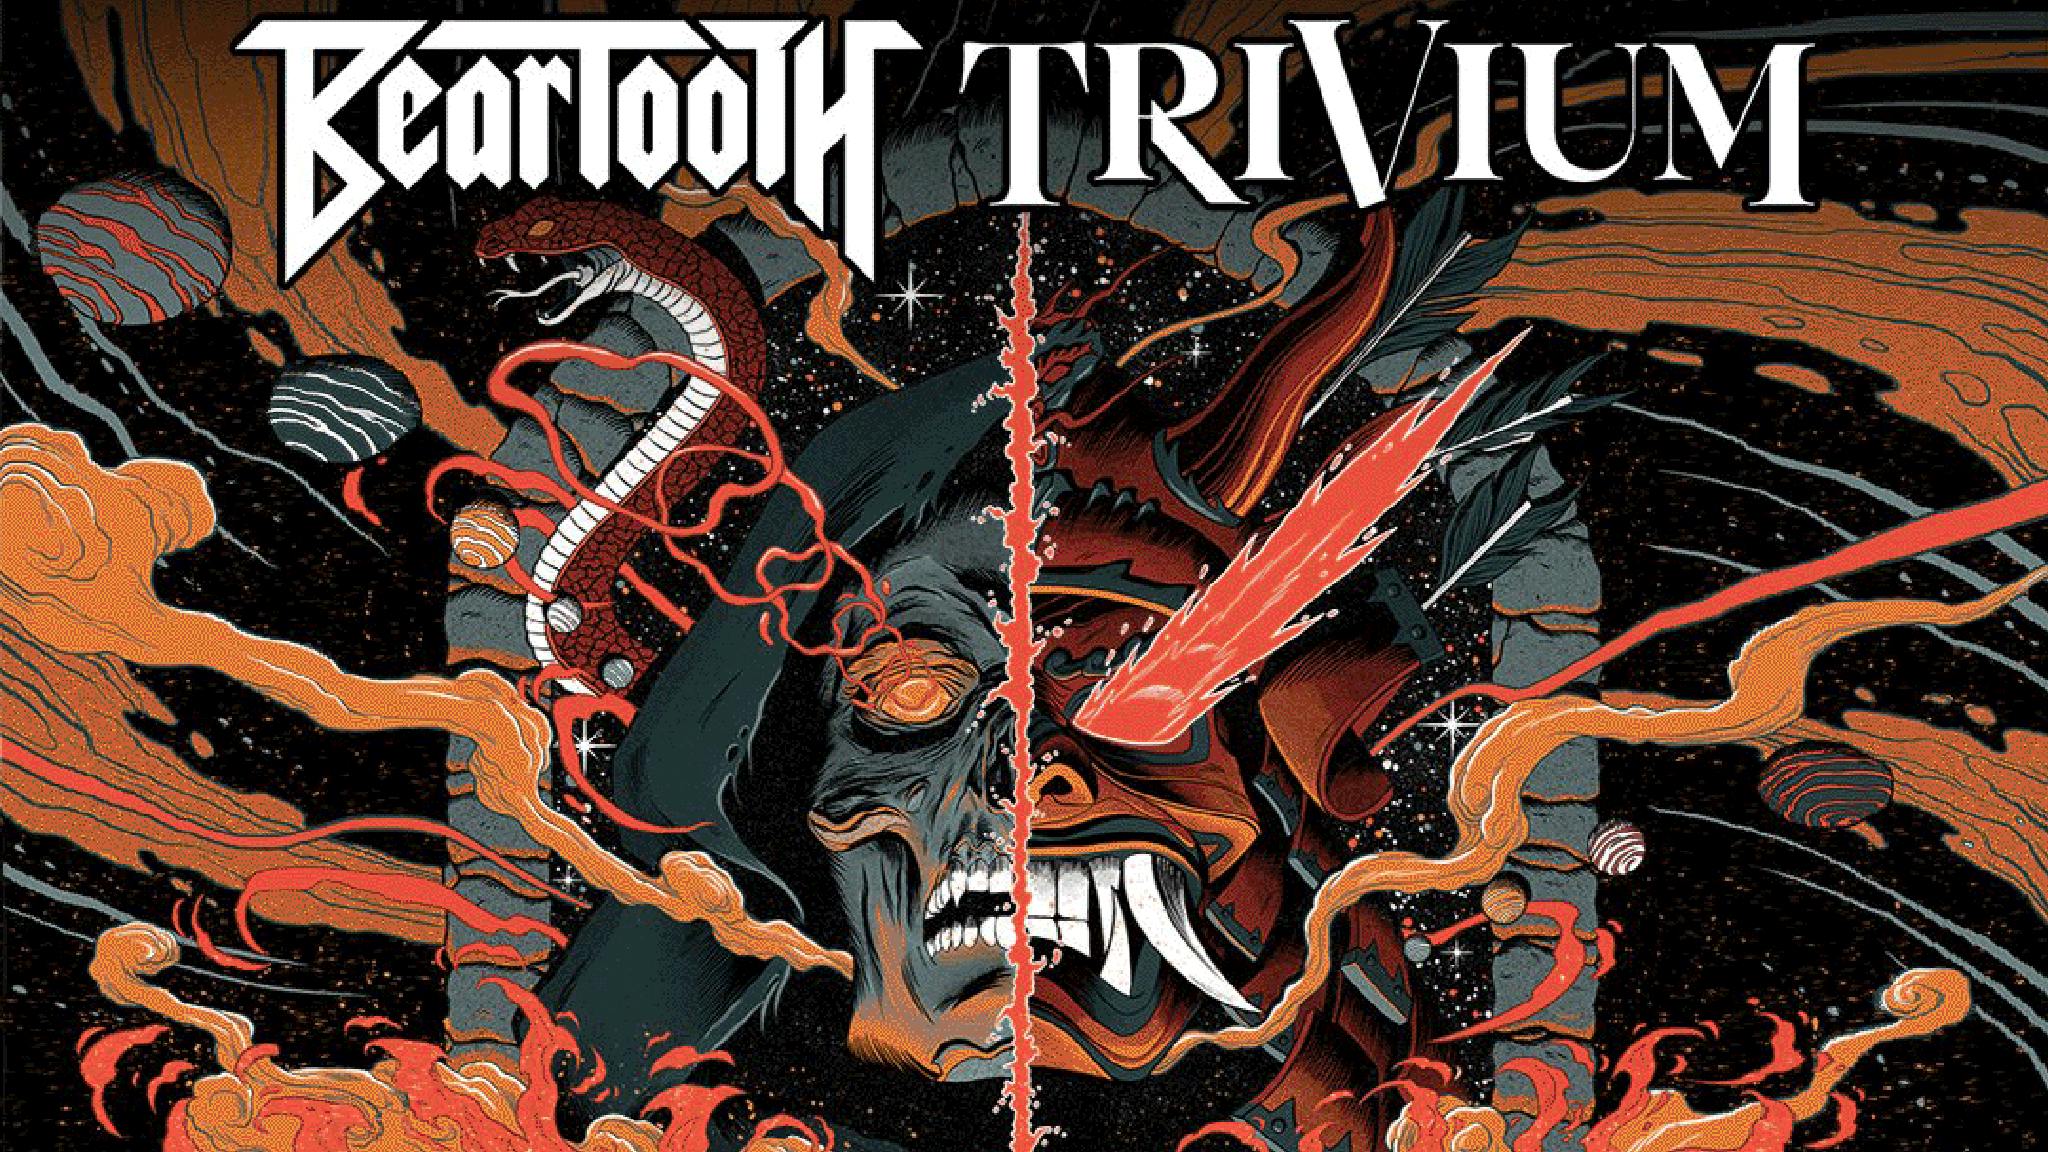 Beartooth and Trivium announce U.S. co-headline tour